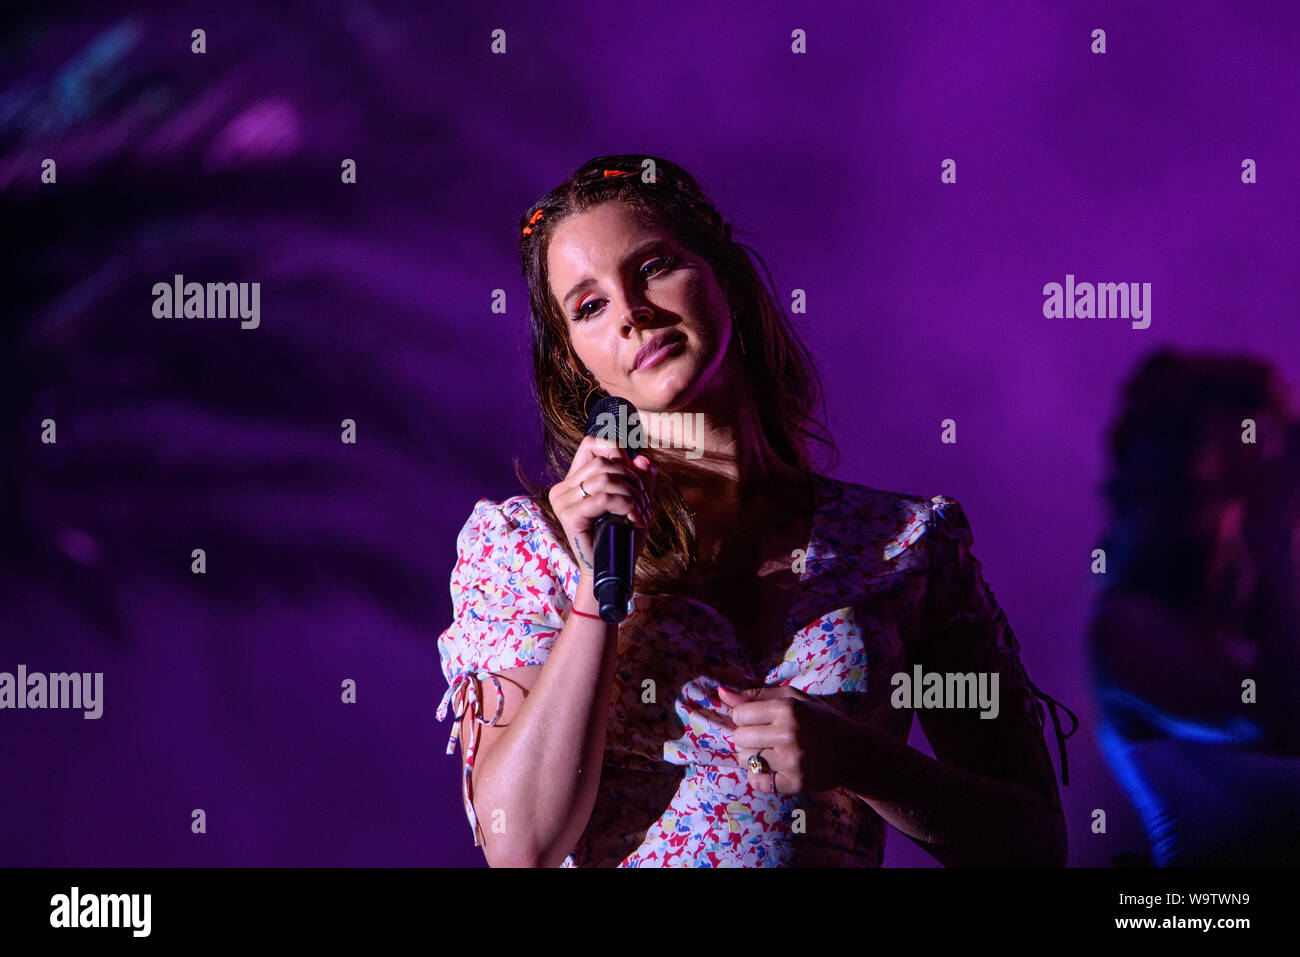 BENICASSIM, SPAIN - JUL 19: Lana del Rey performs in concert at FIB (Festival Internacional de Benicassim) Festival on July 19, 2019 in Benicassim, Sp Stock Photo